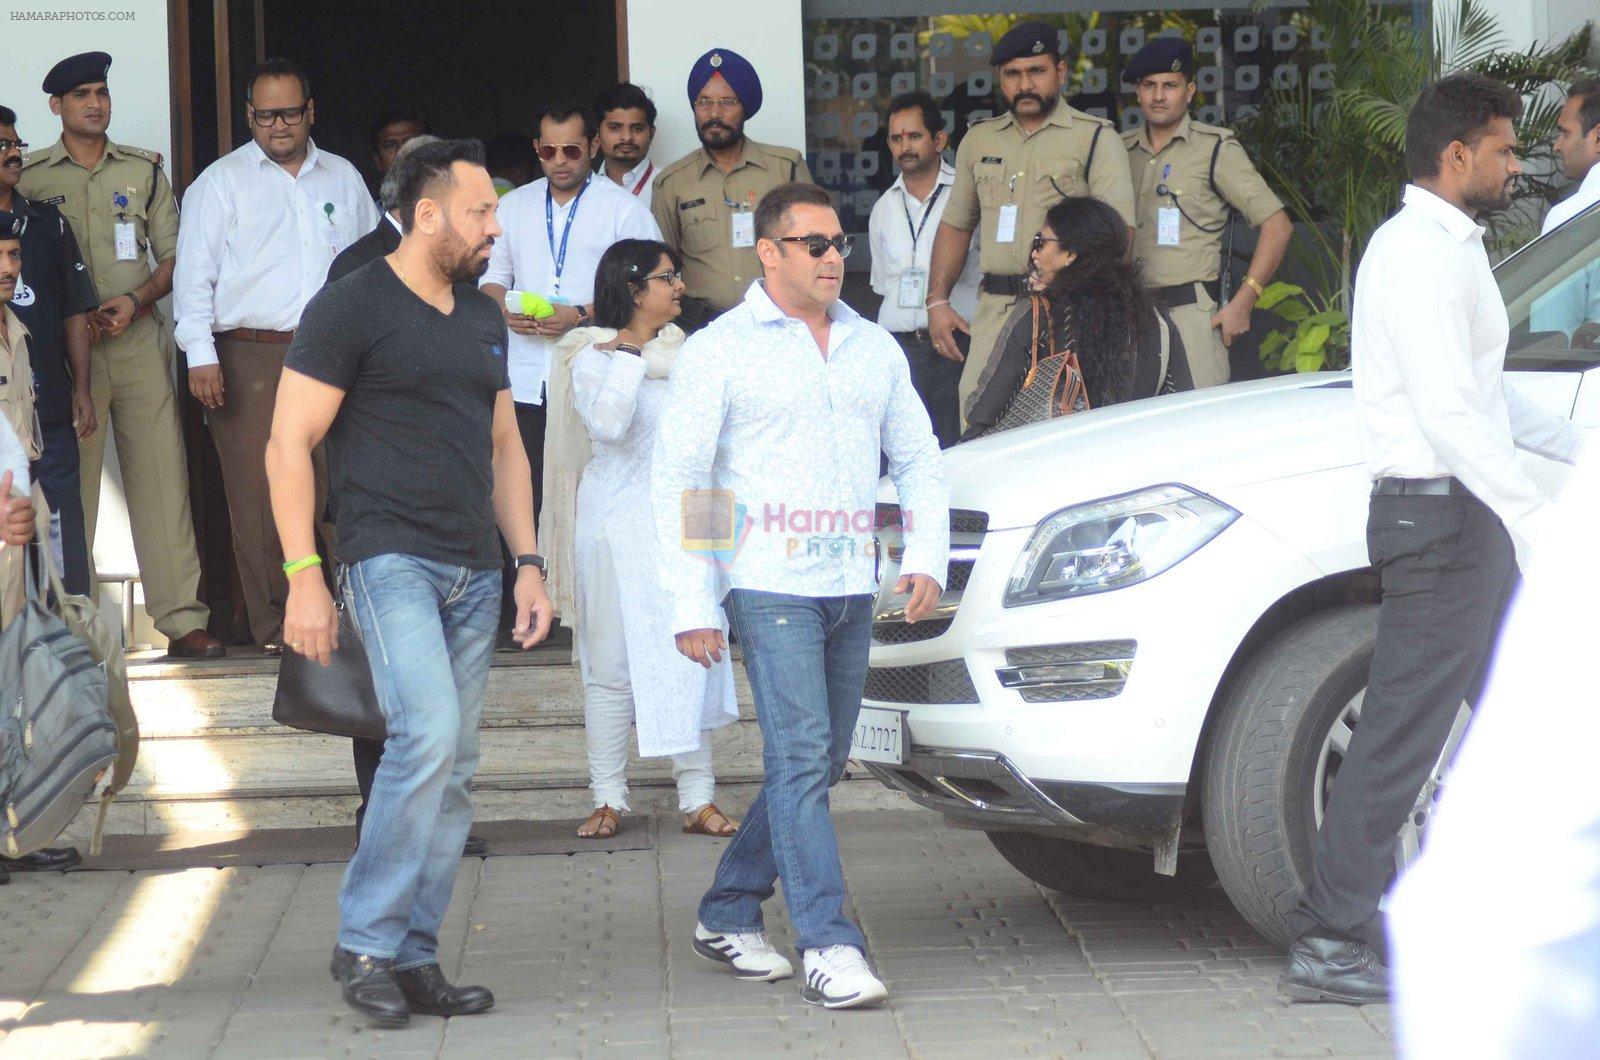 Salman Khan returns from Jodhpur on 10th March 2016